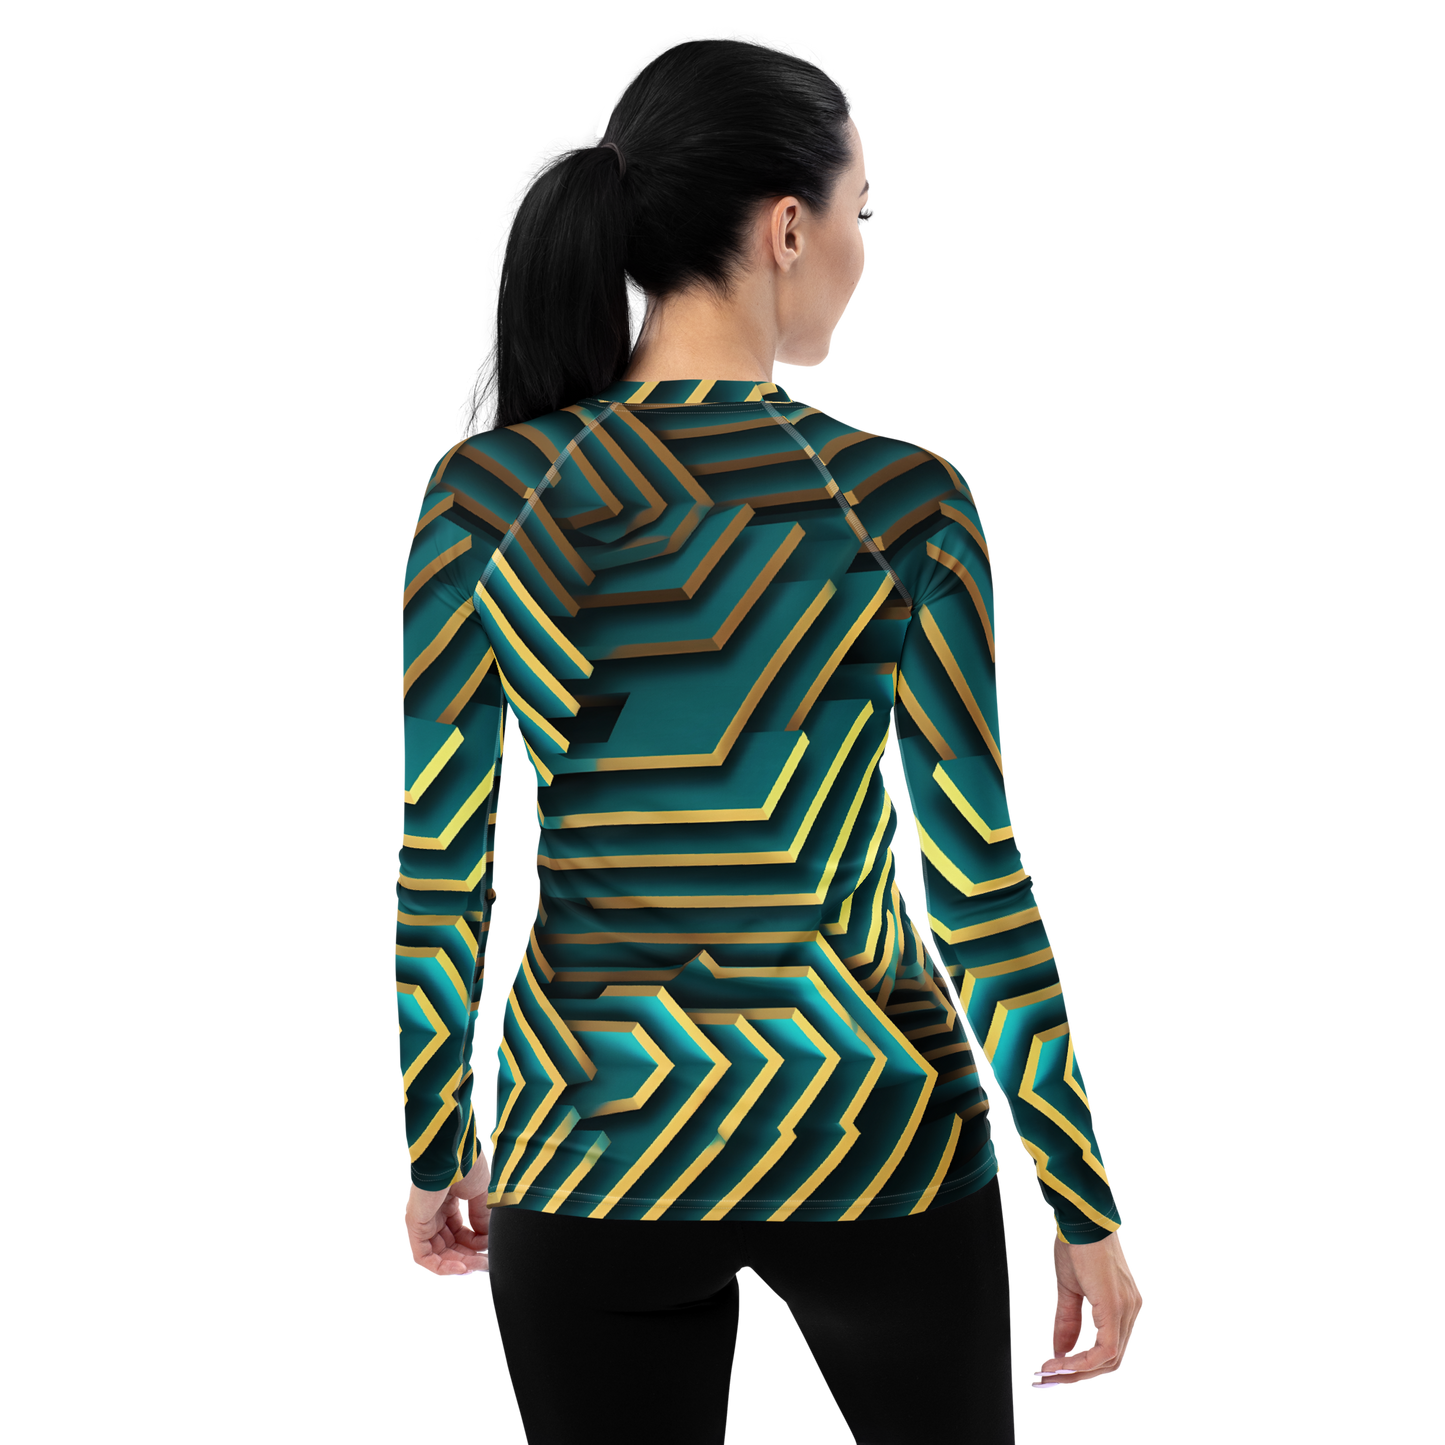 3D Maze Illusion | 3D Patterns | All-Over Print Women's Rash Guard - #5